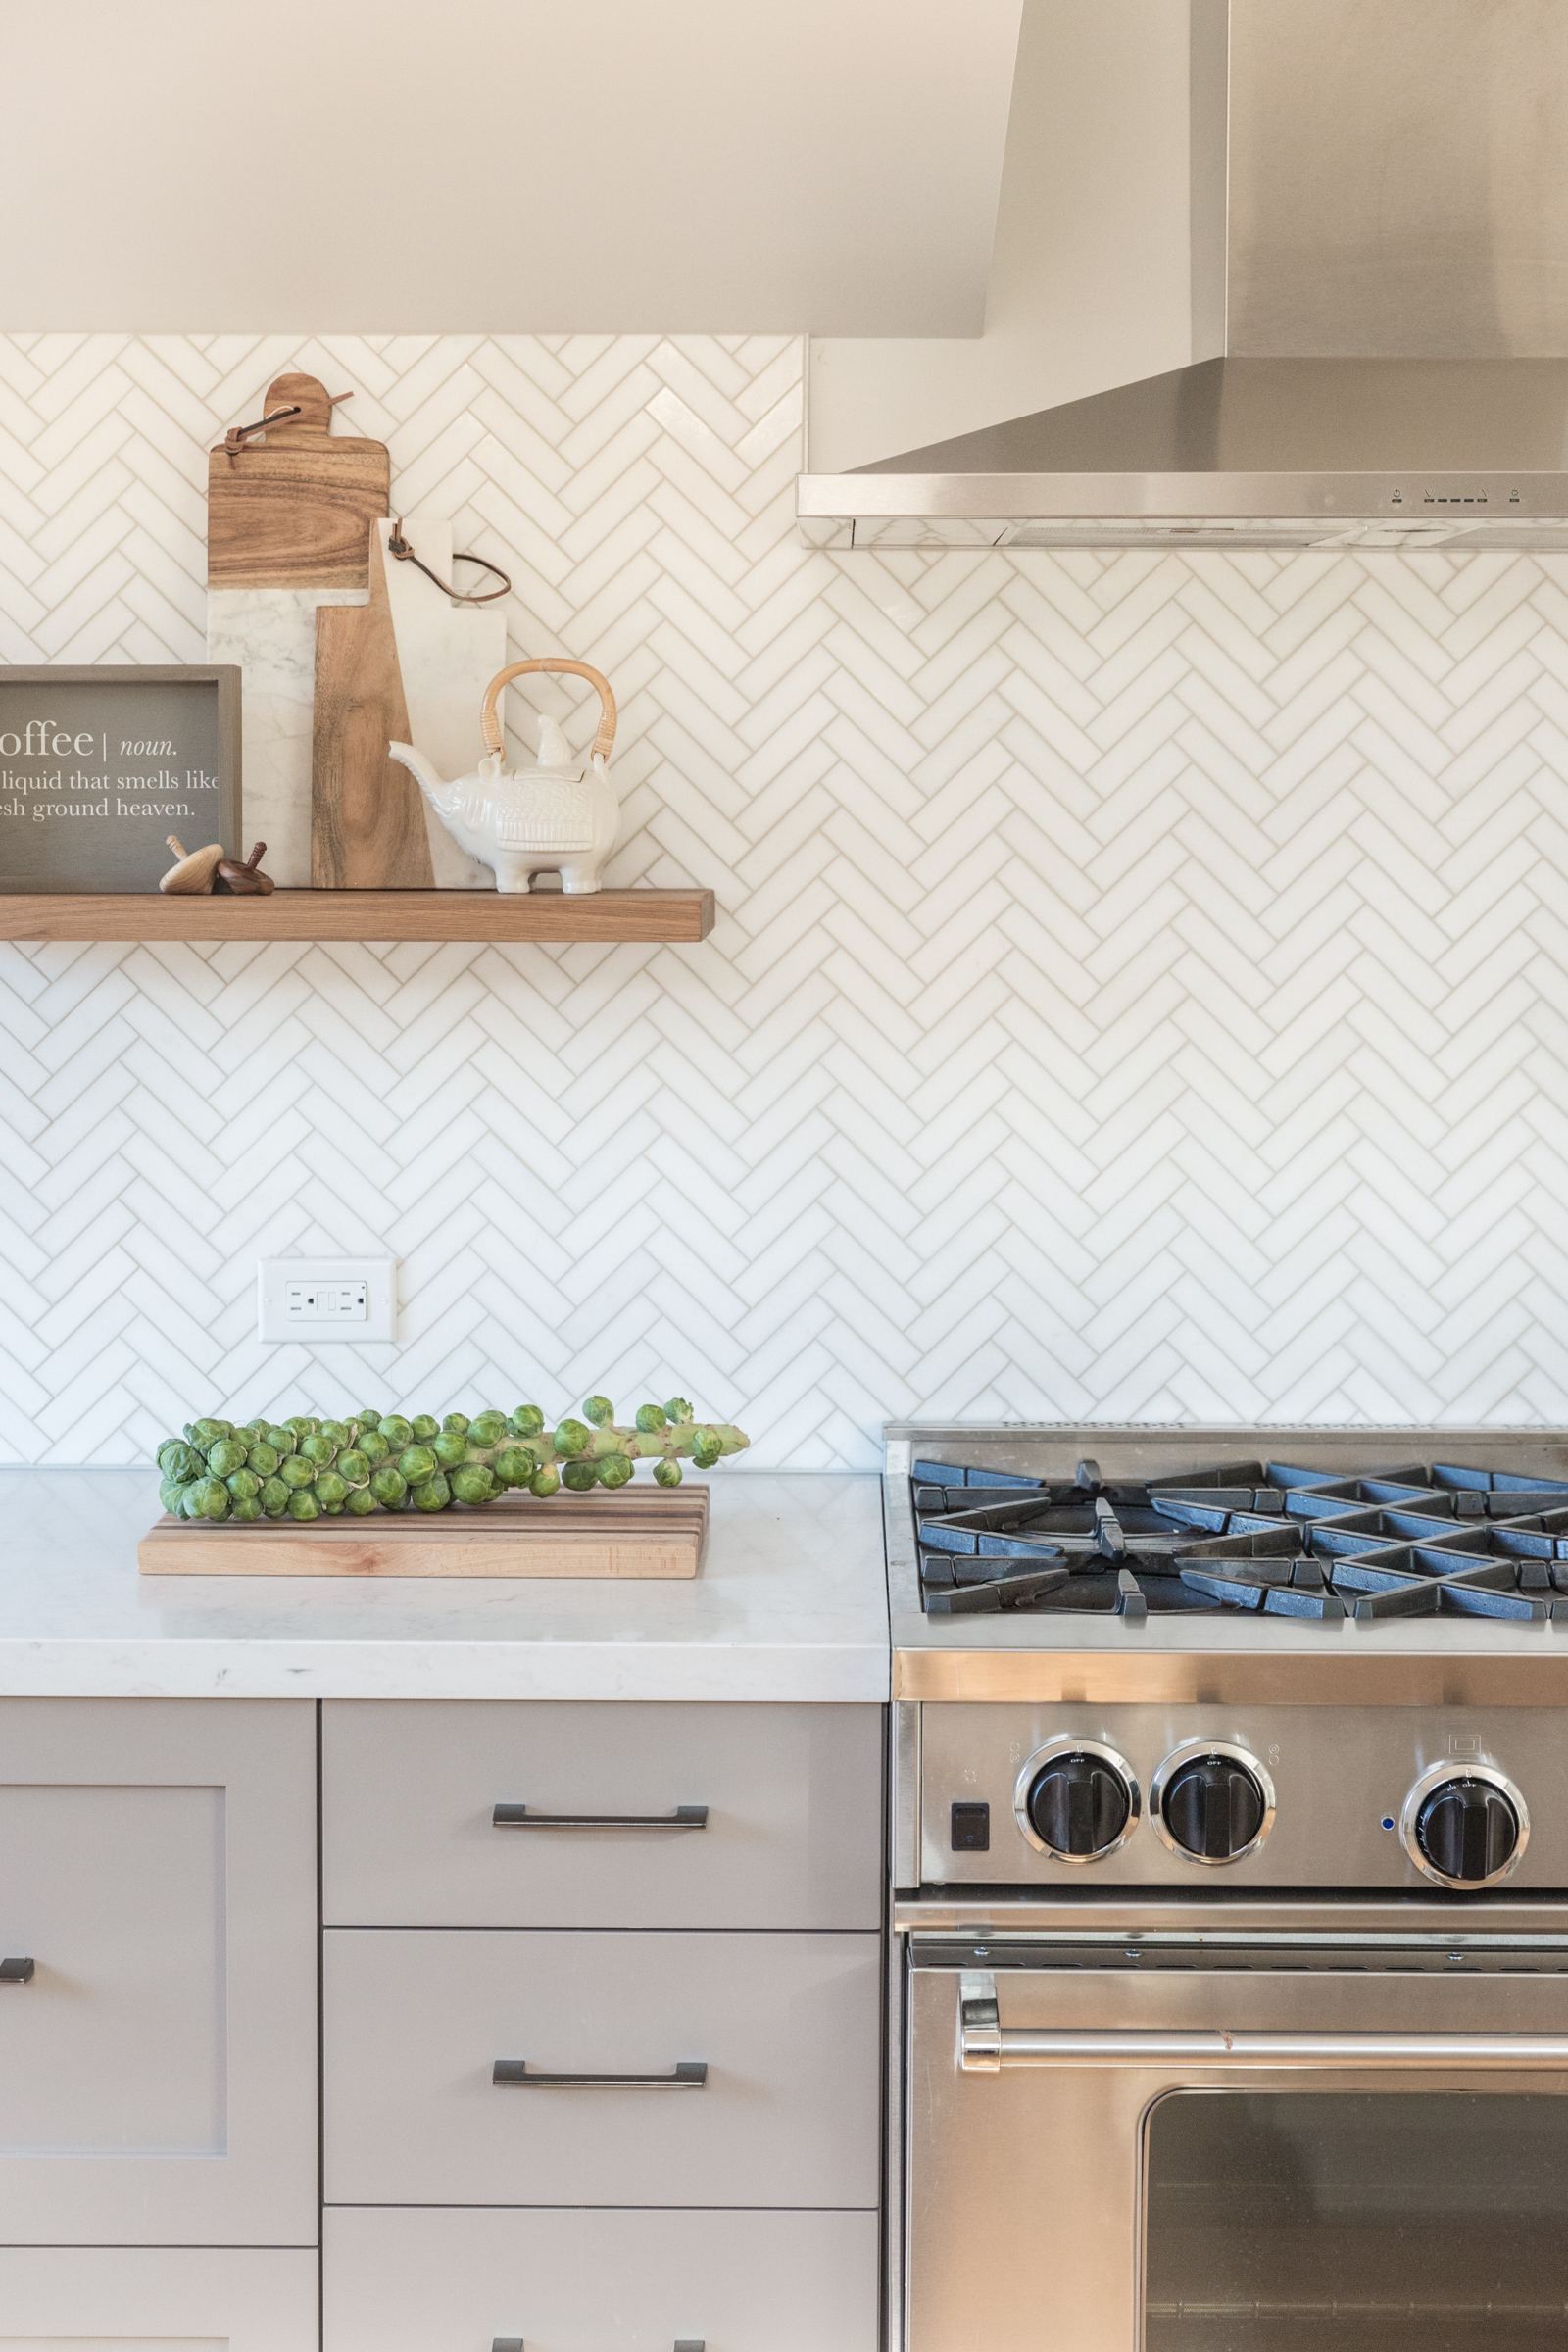 11 types of white kitchen splashback tiles: add interest with